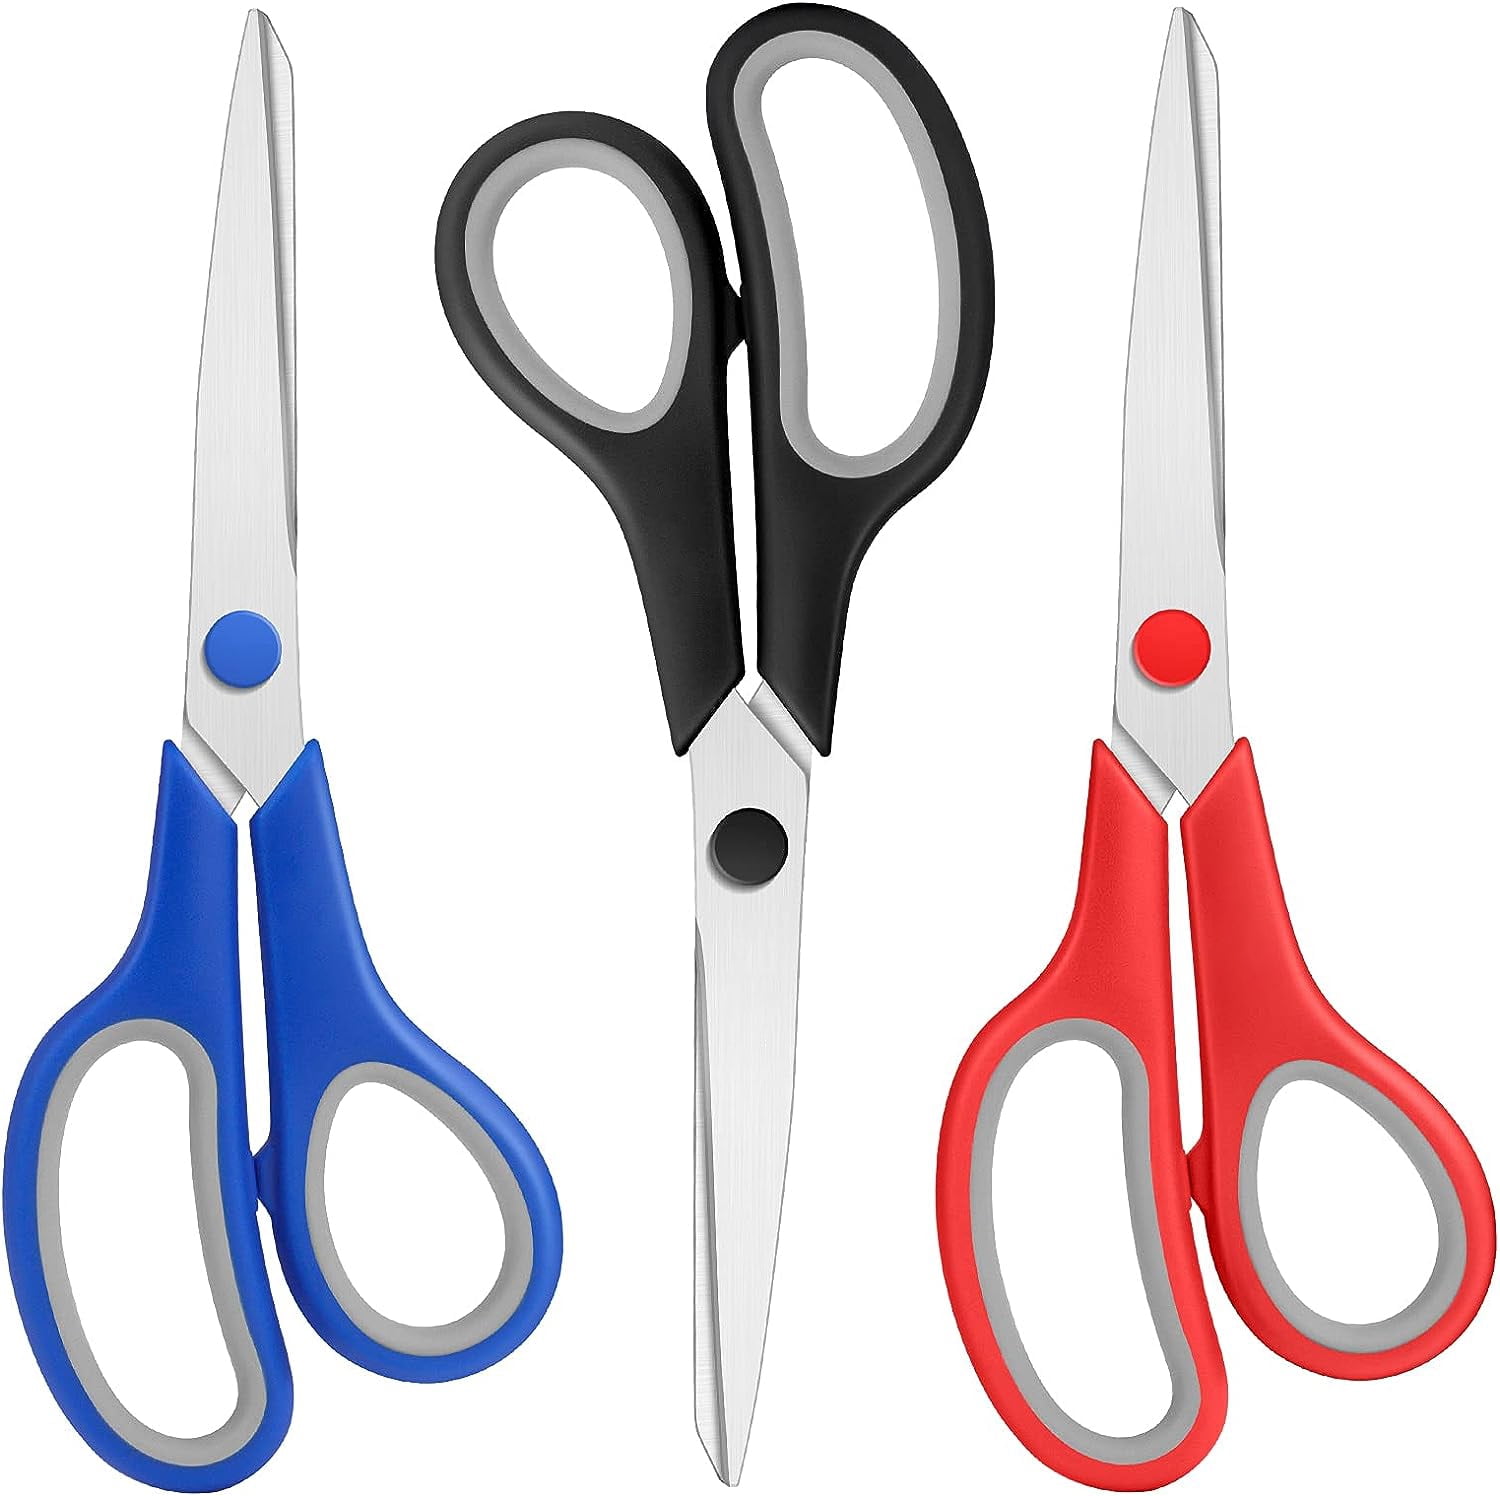 Westcott® CarboTitanium Bonded Scissors, 9 Long, 4.5 Cut Length,  White/Green Bent Handle